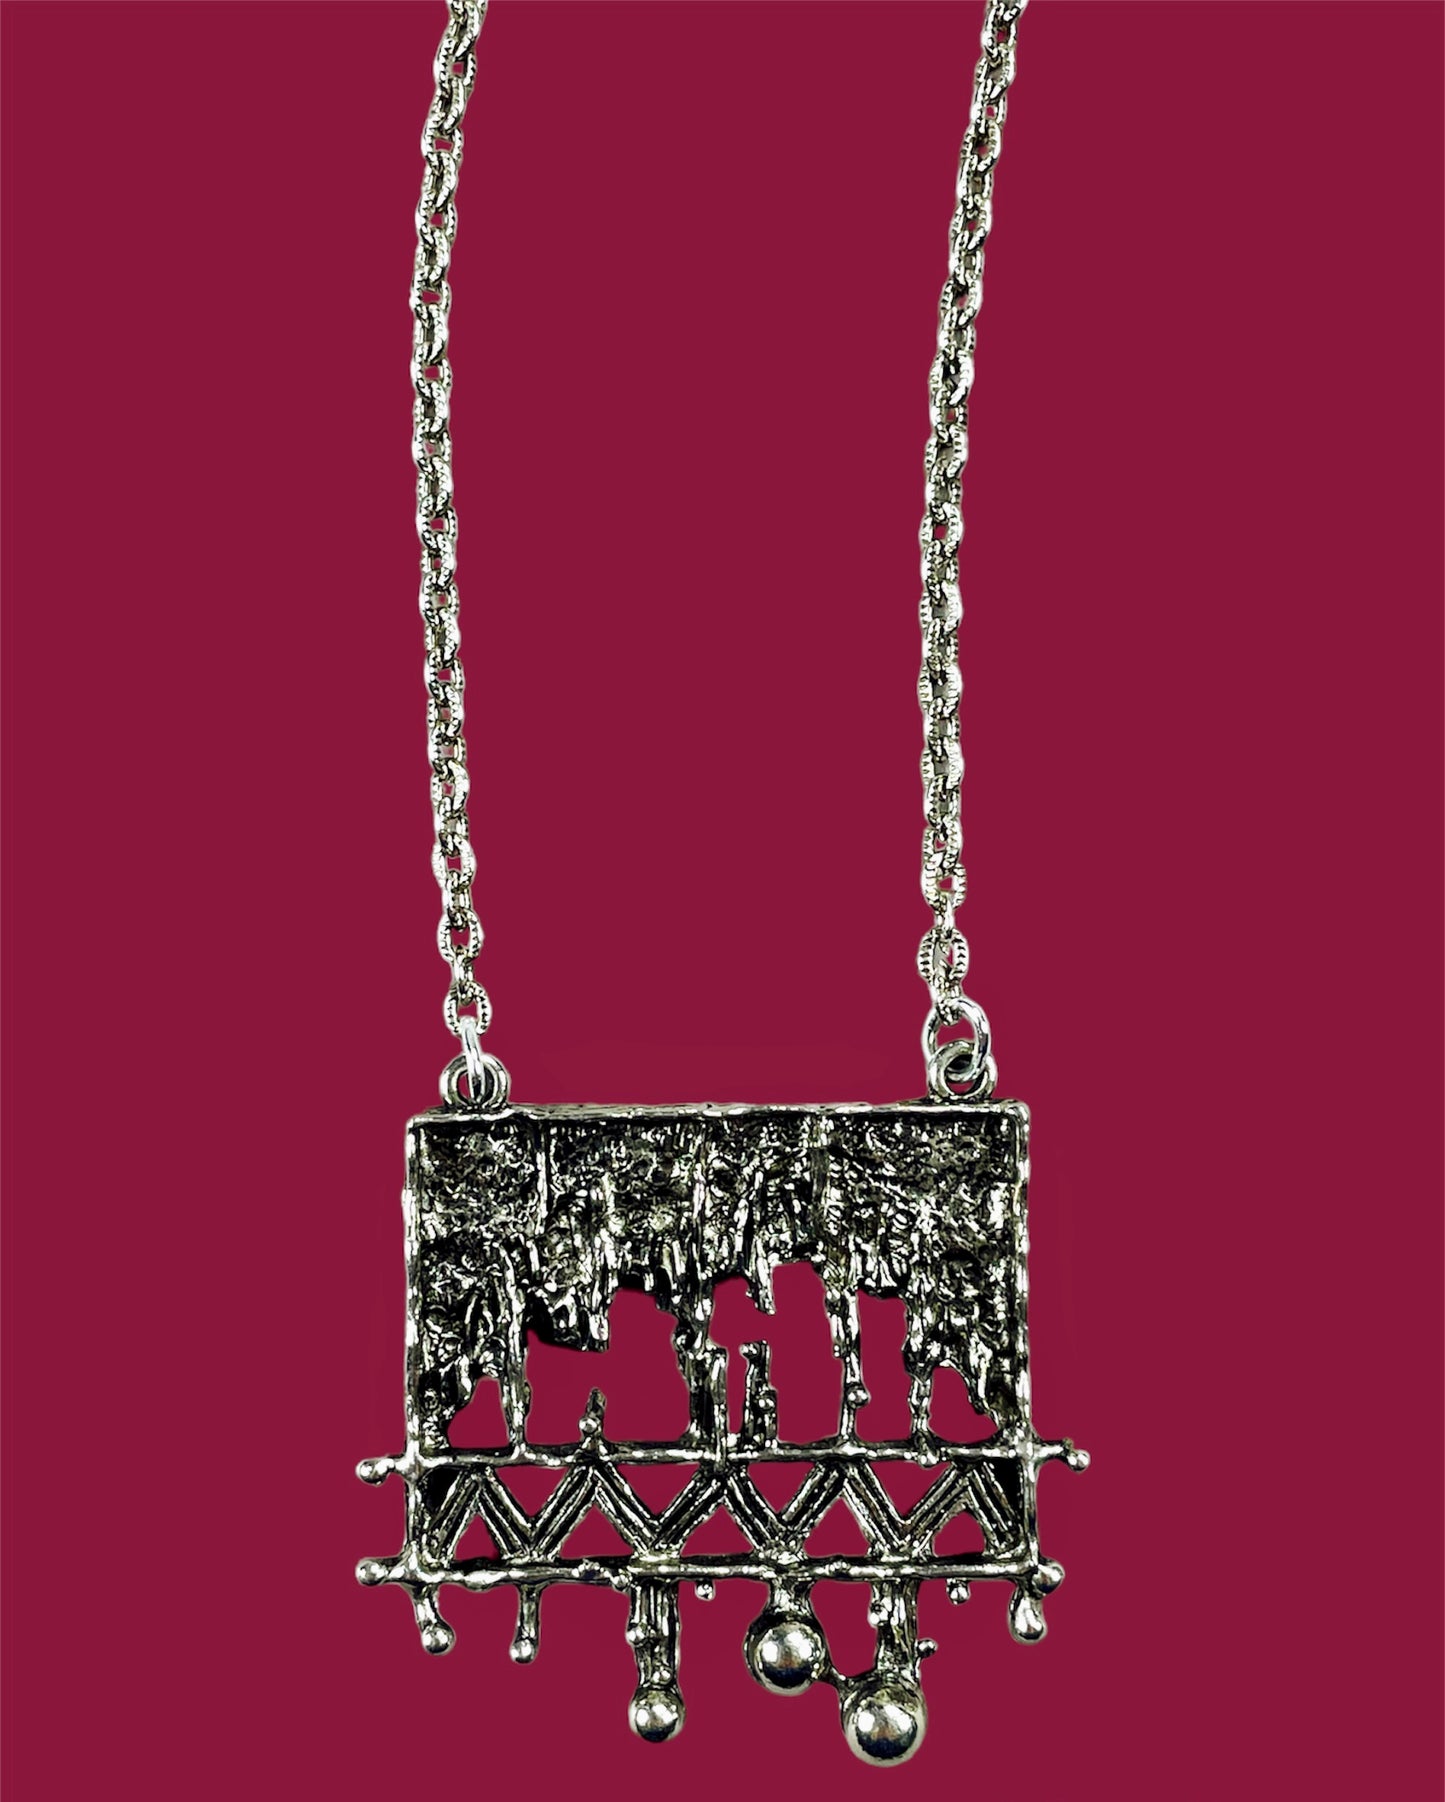 Abstract rectangular silvered metal pendant